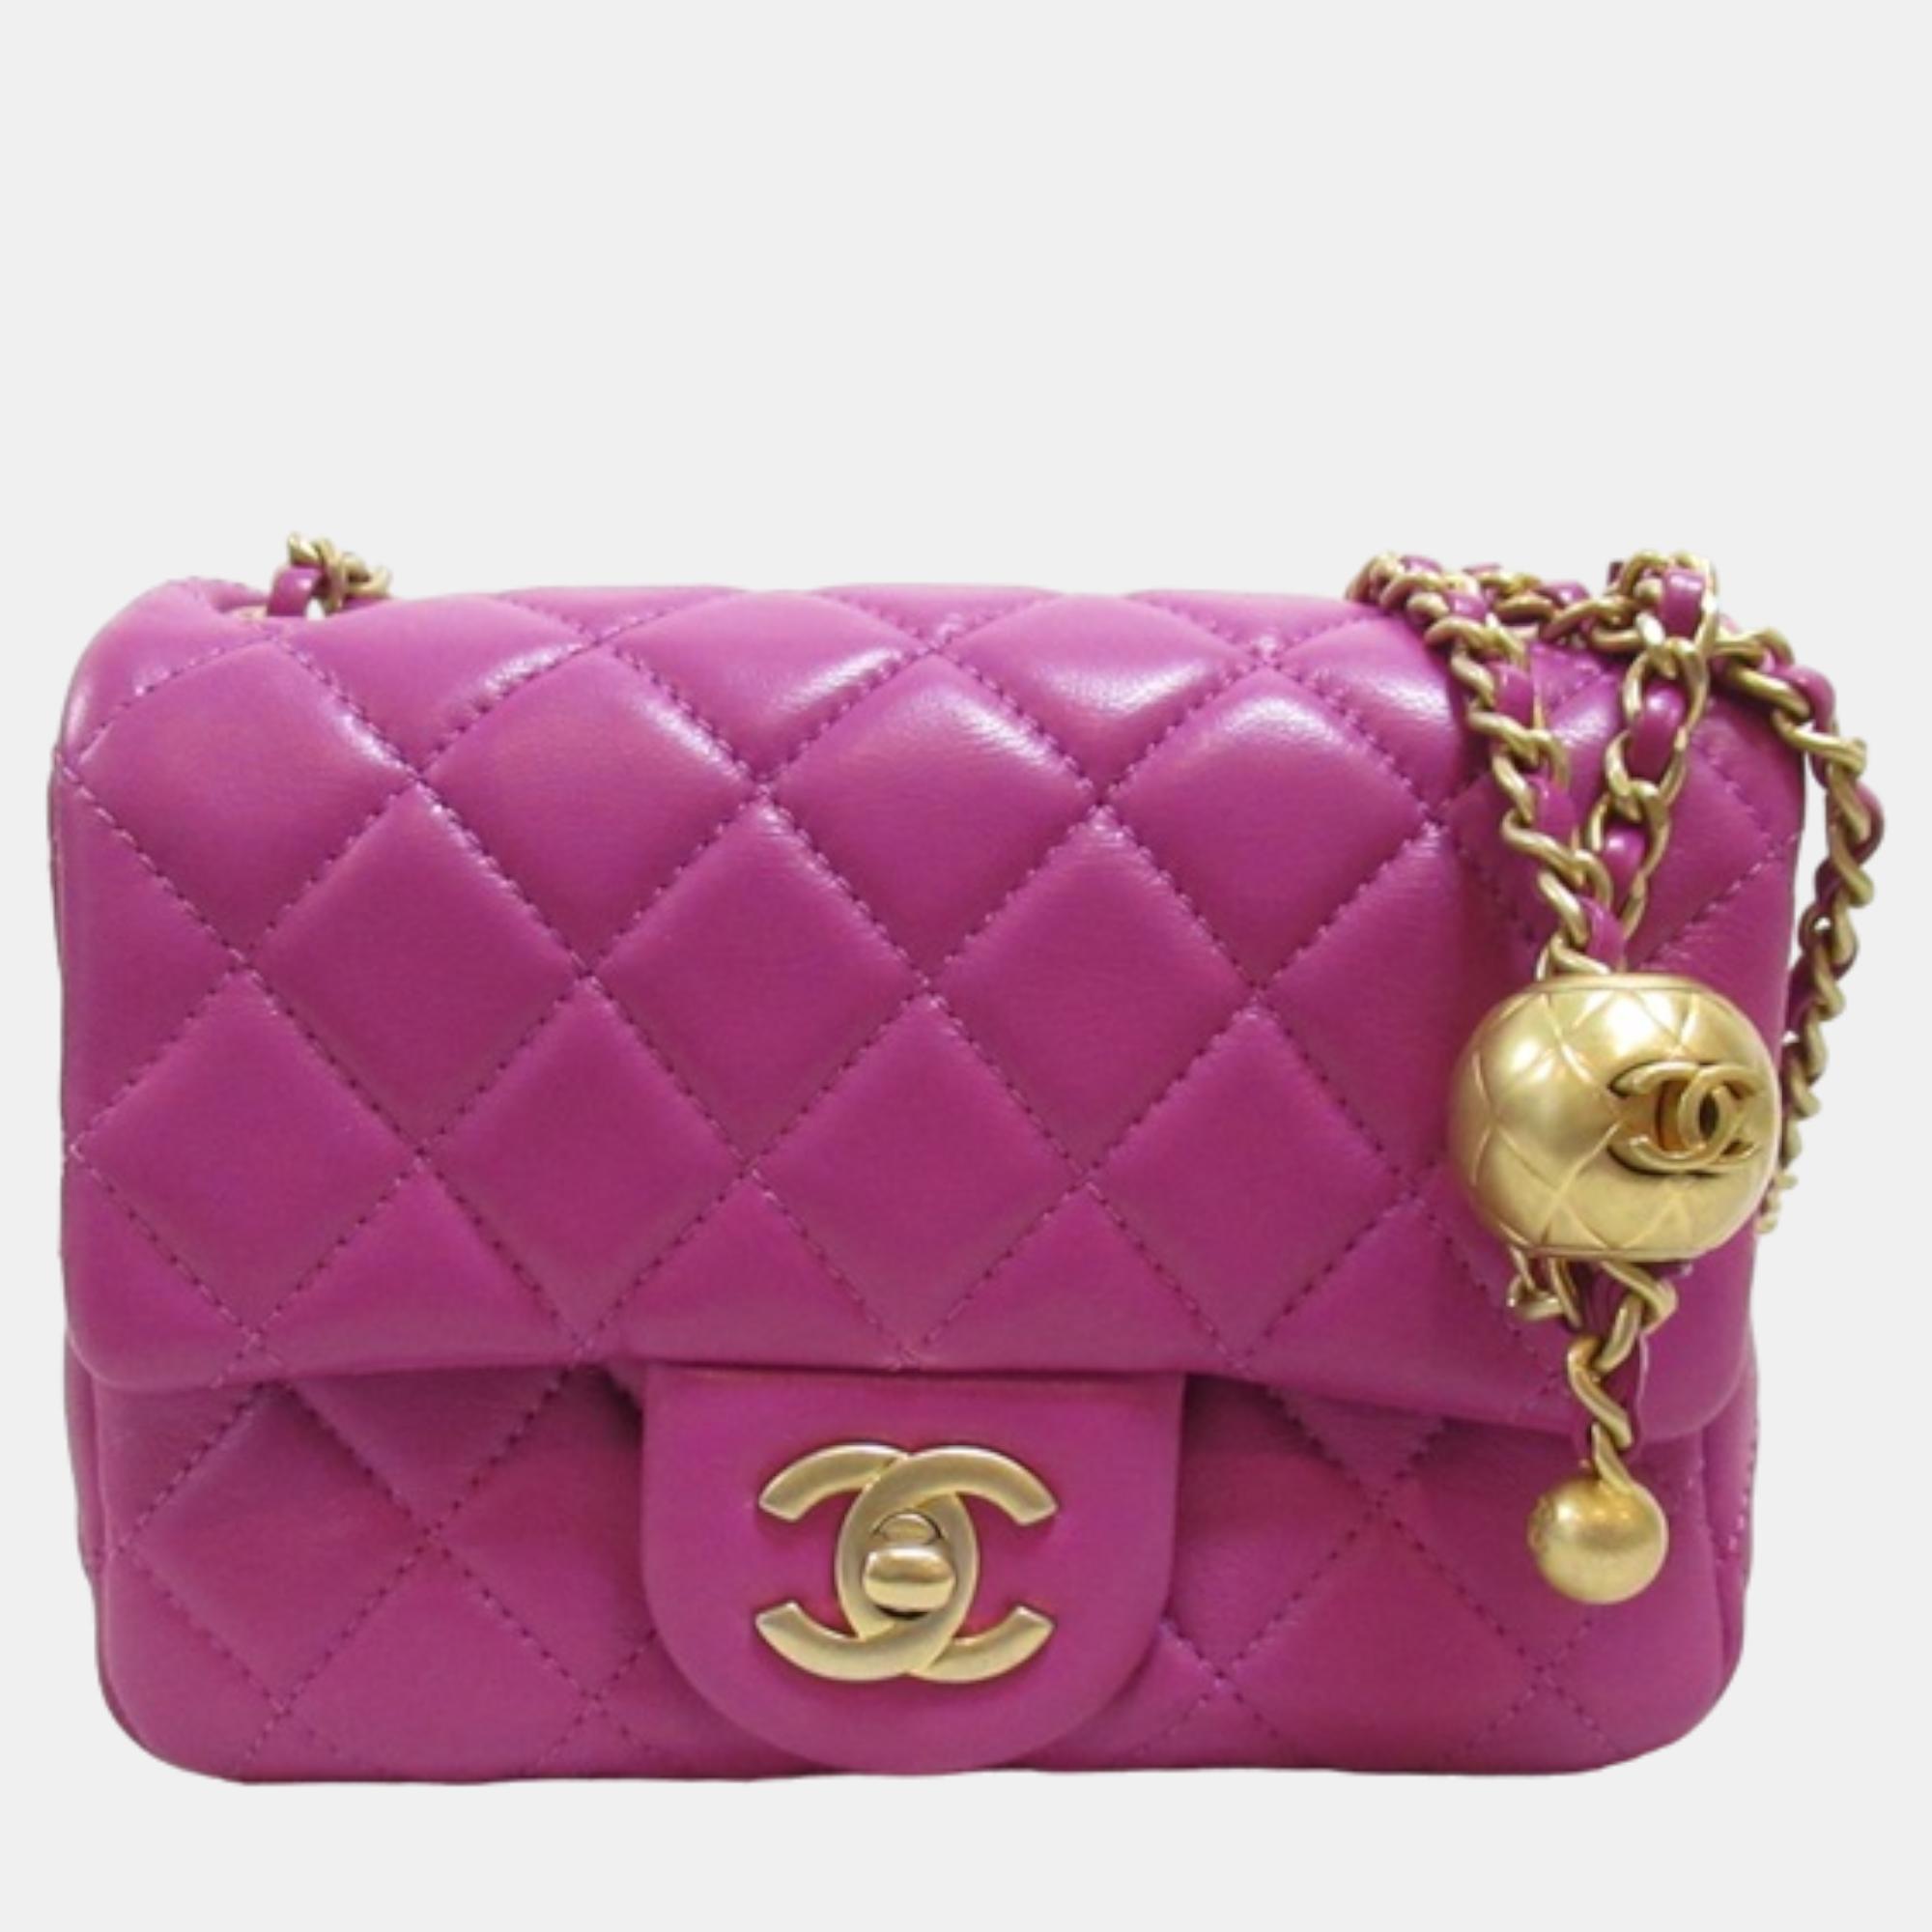 Chanel purple leather cc mini matelasse flap bag